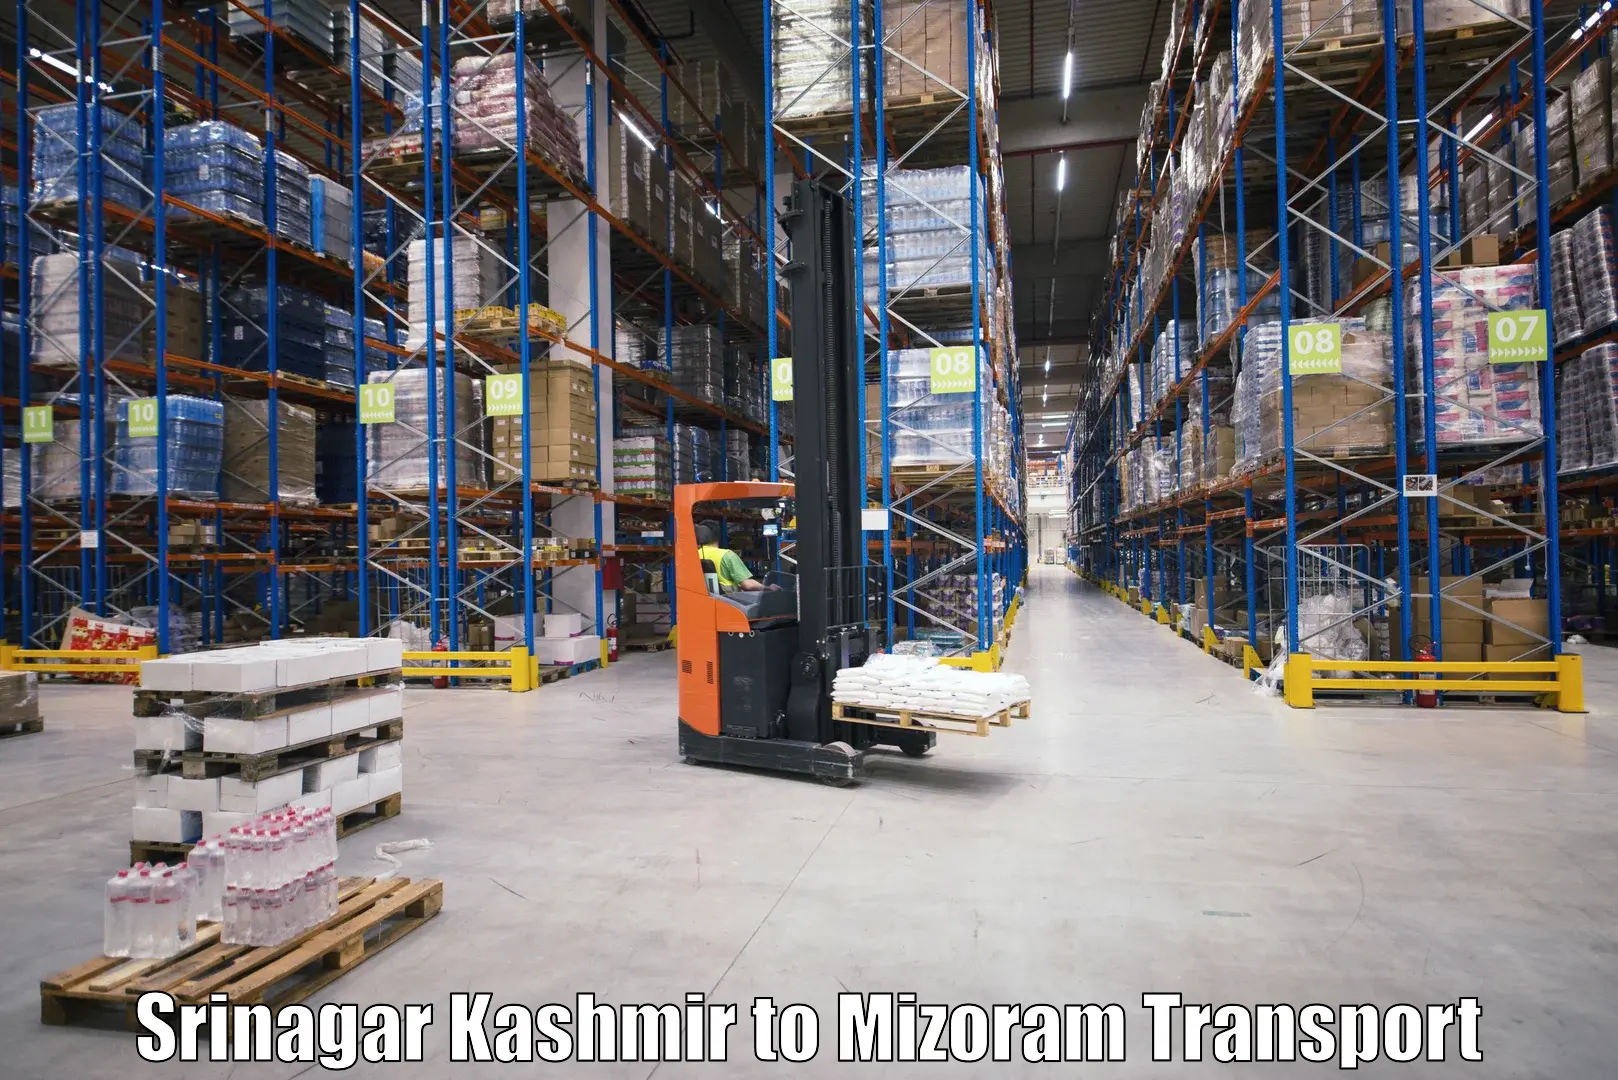 Delivery service Srinagar Kashmir to Siaha